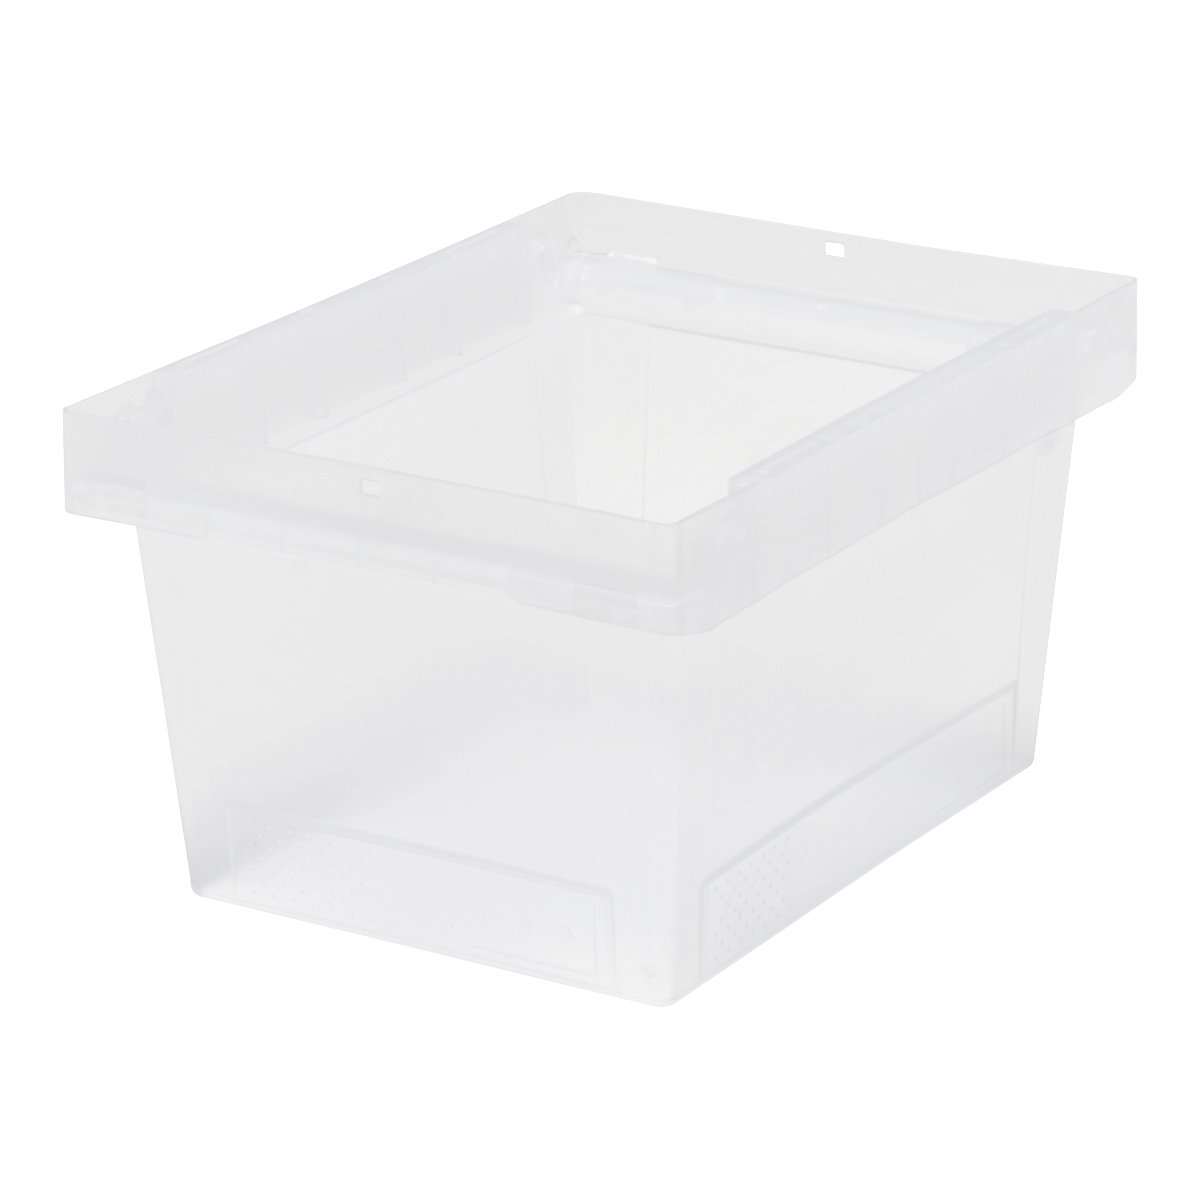 Reusable container, transparent – BITO